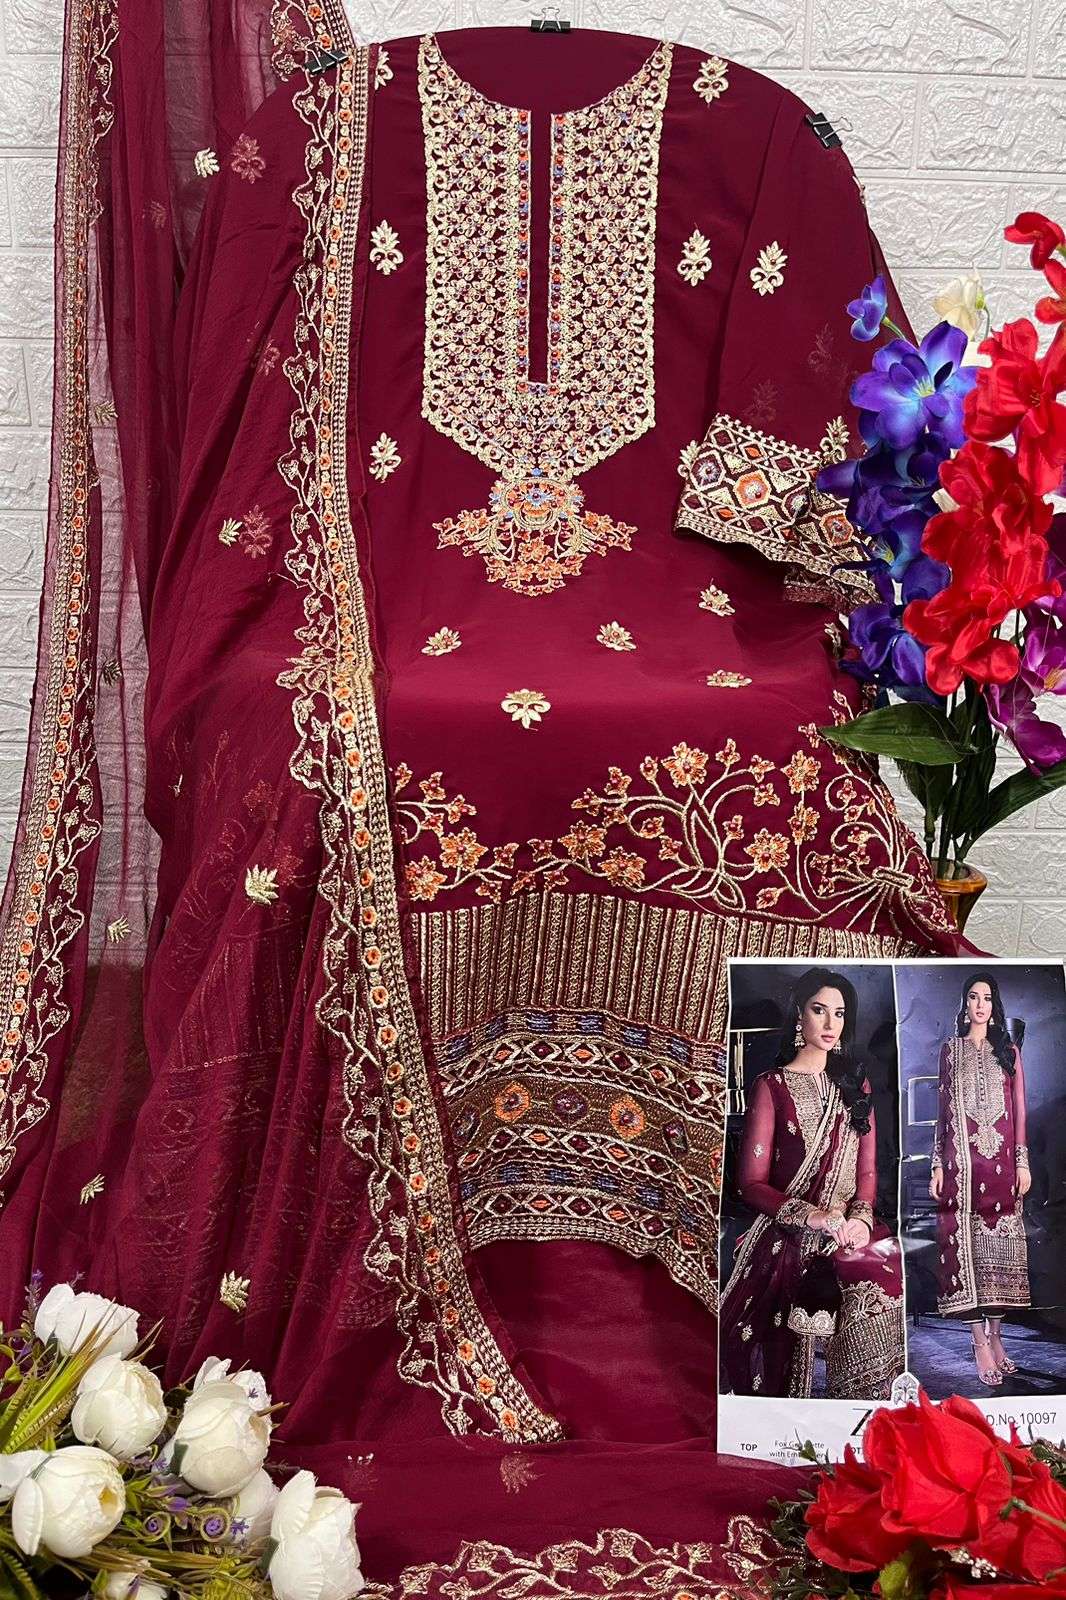  zaha khushbu vol-2 10097-10099 series stylish designer pakistani salwar kameez wholesale price surat